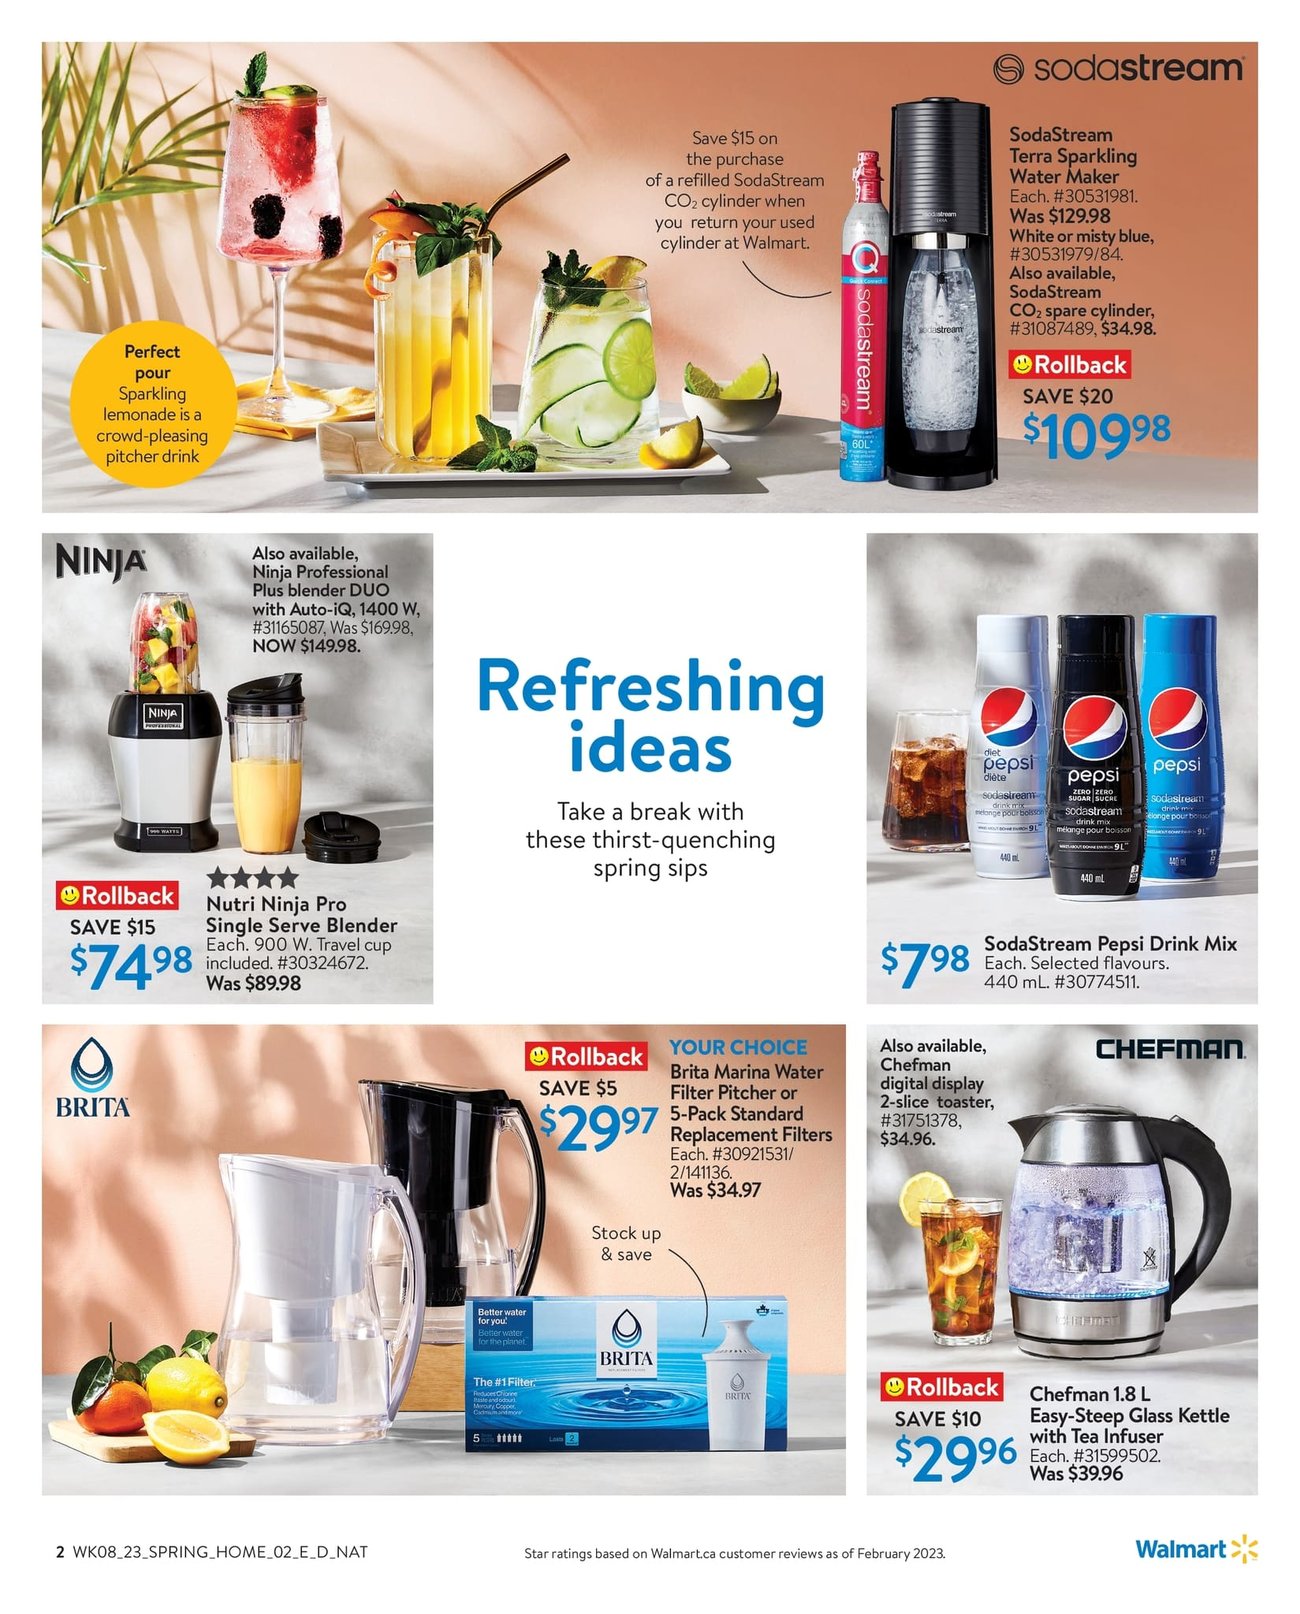 Walmart Canada - Home Refresh - Page 2